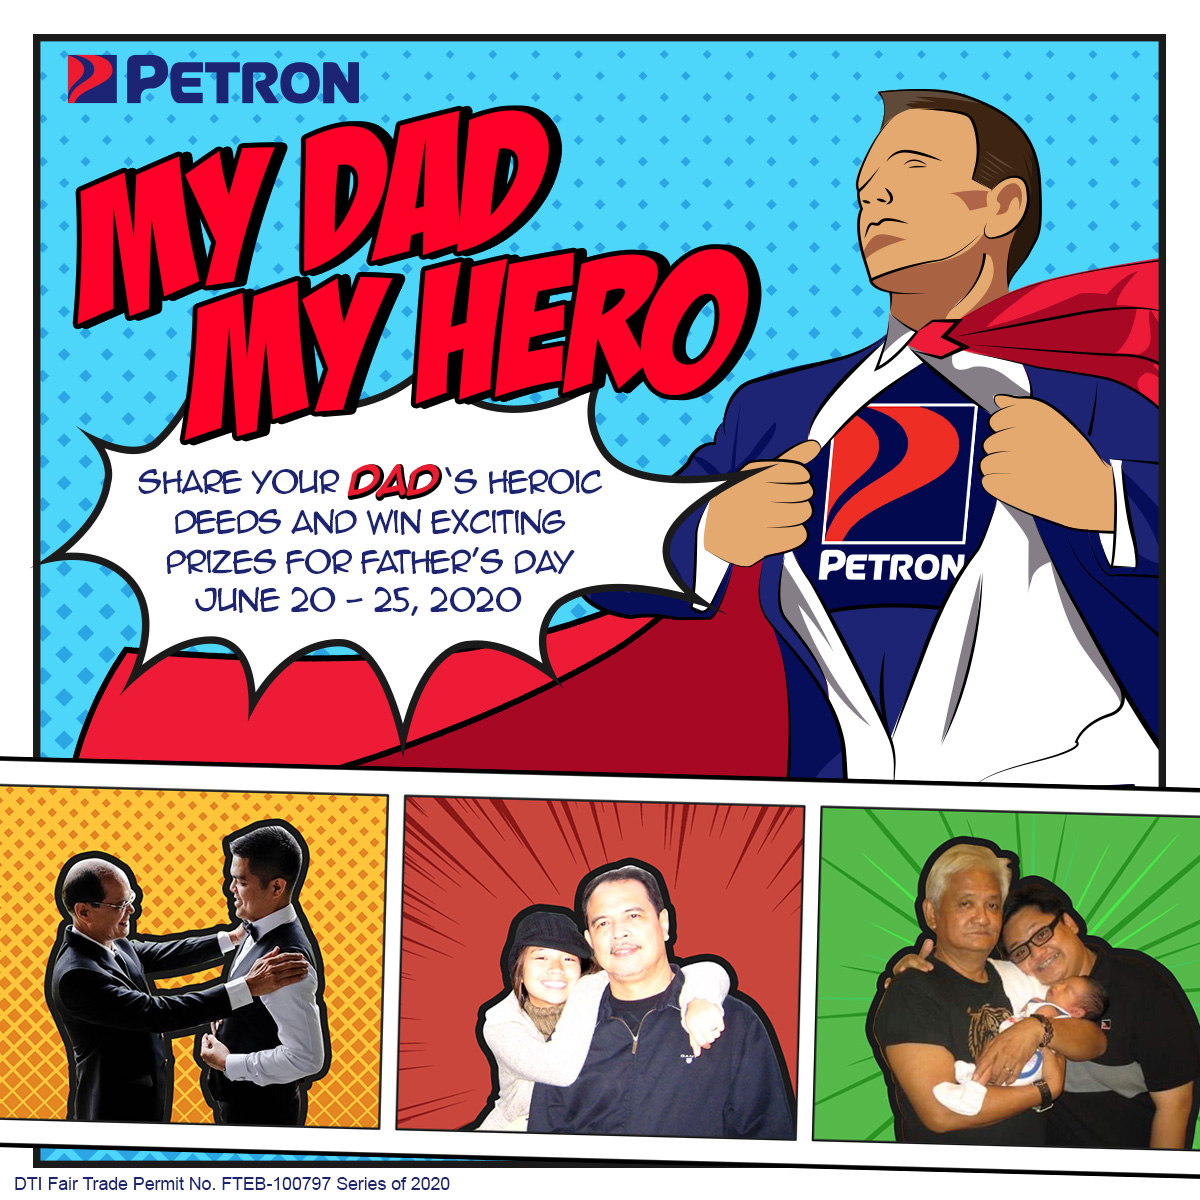 My Dad, My Hero Online Promo